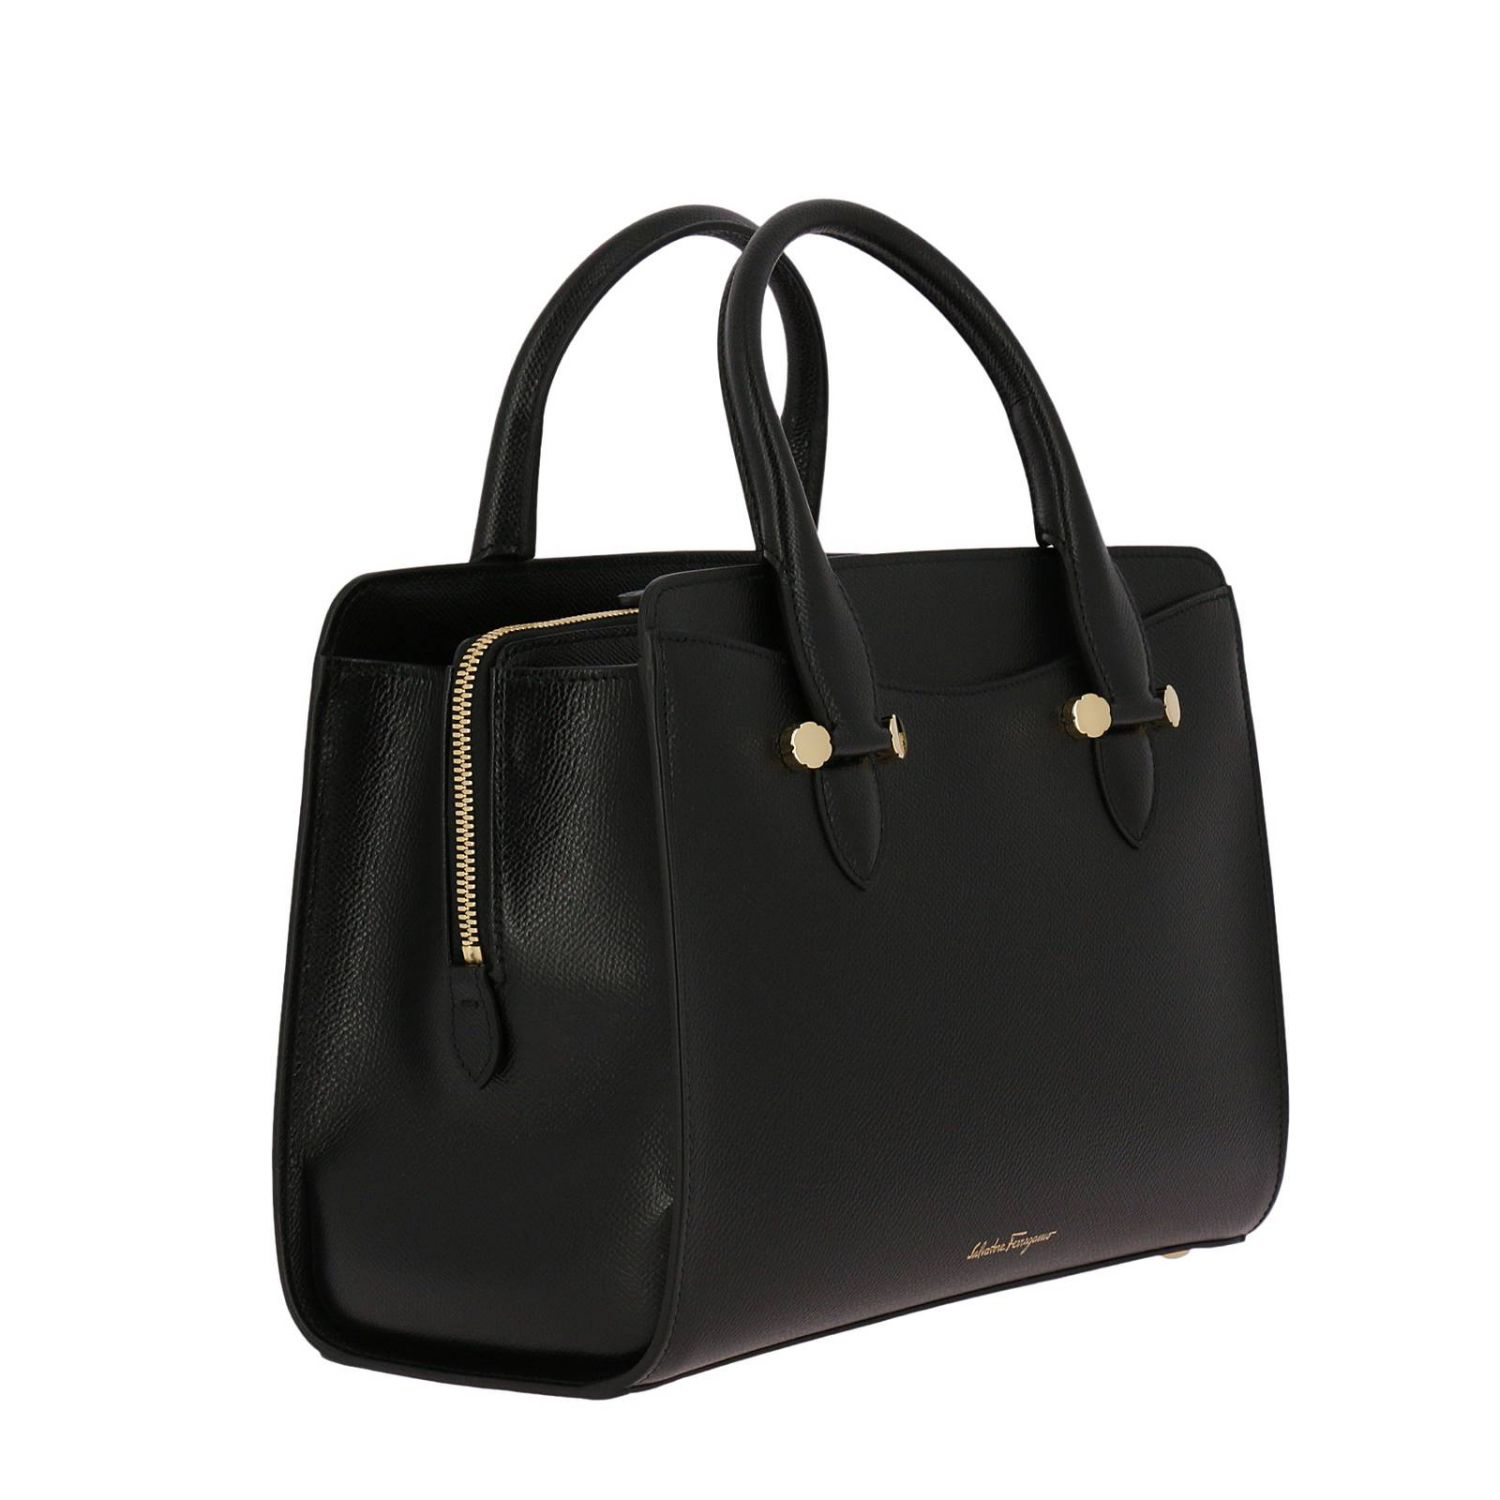 Salvatore Ferragamo Outlet: Shoulder bag women | Handbag Salvatore ...